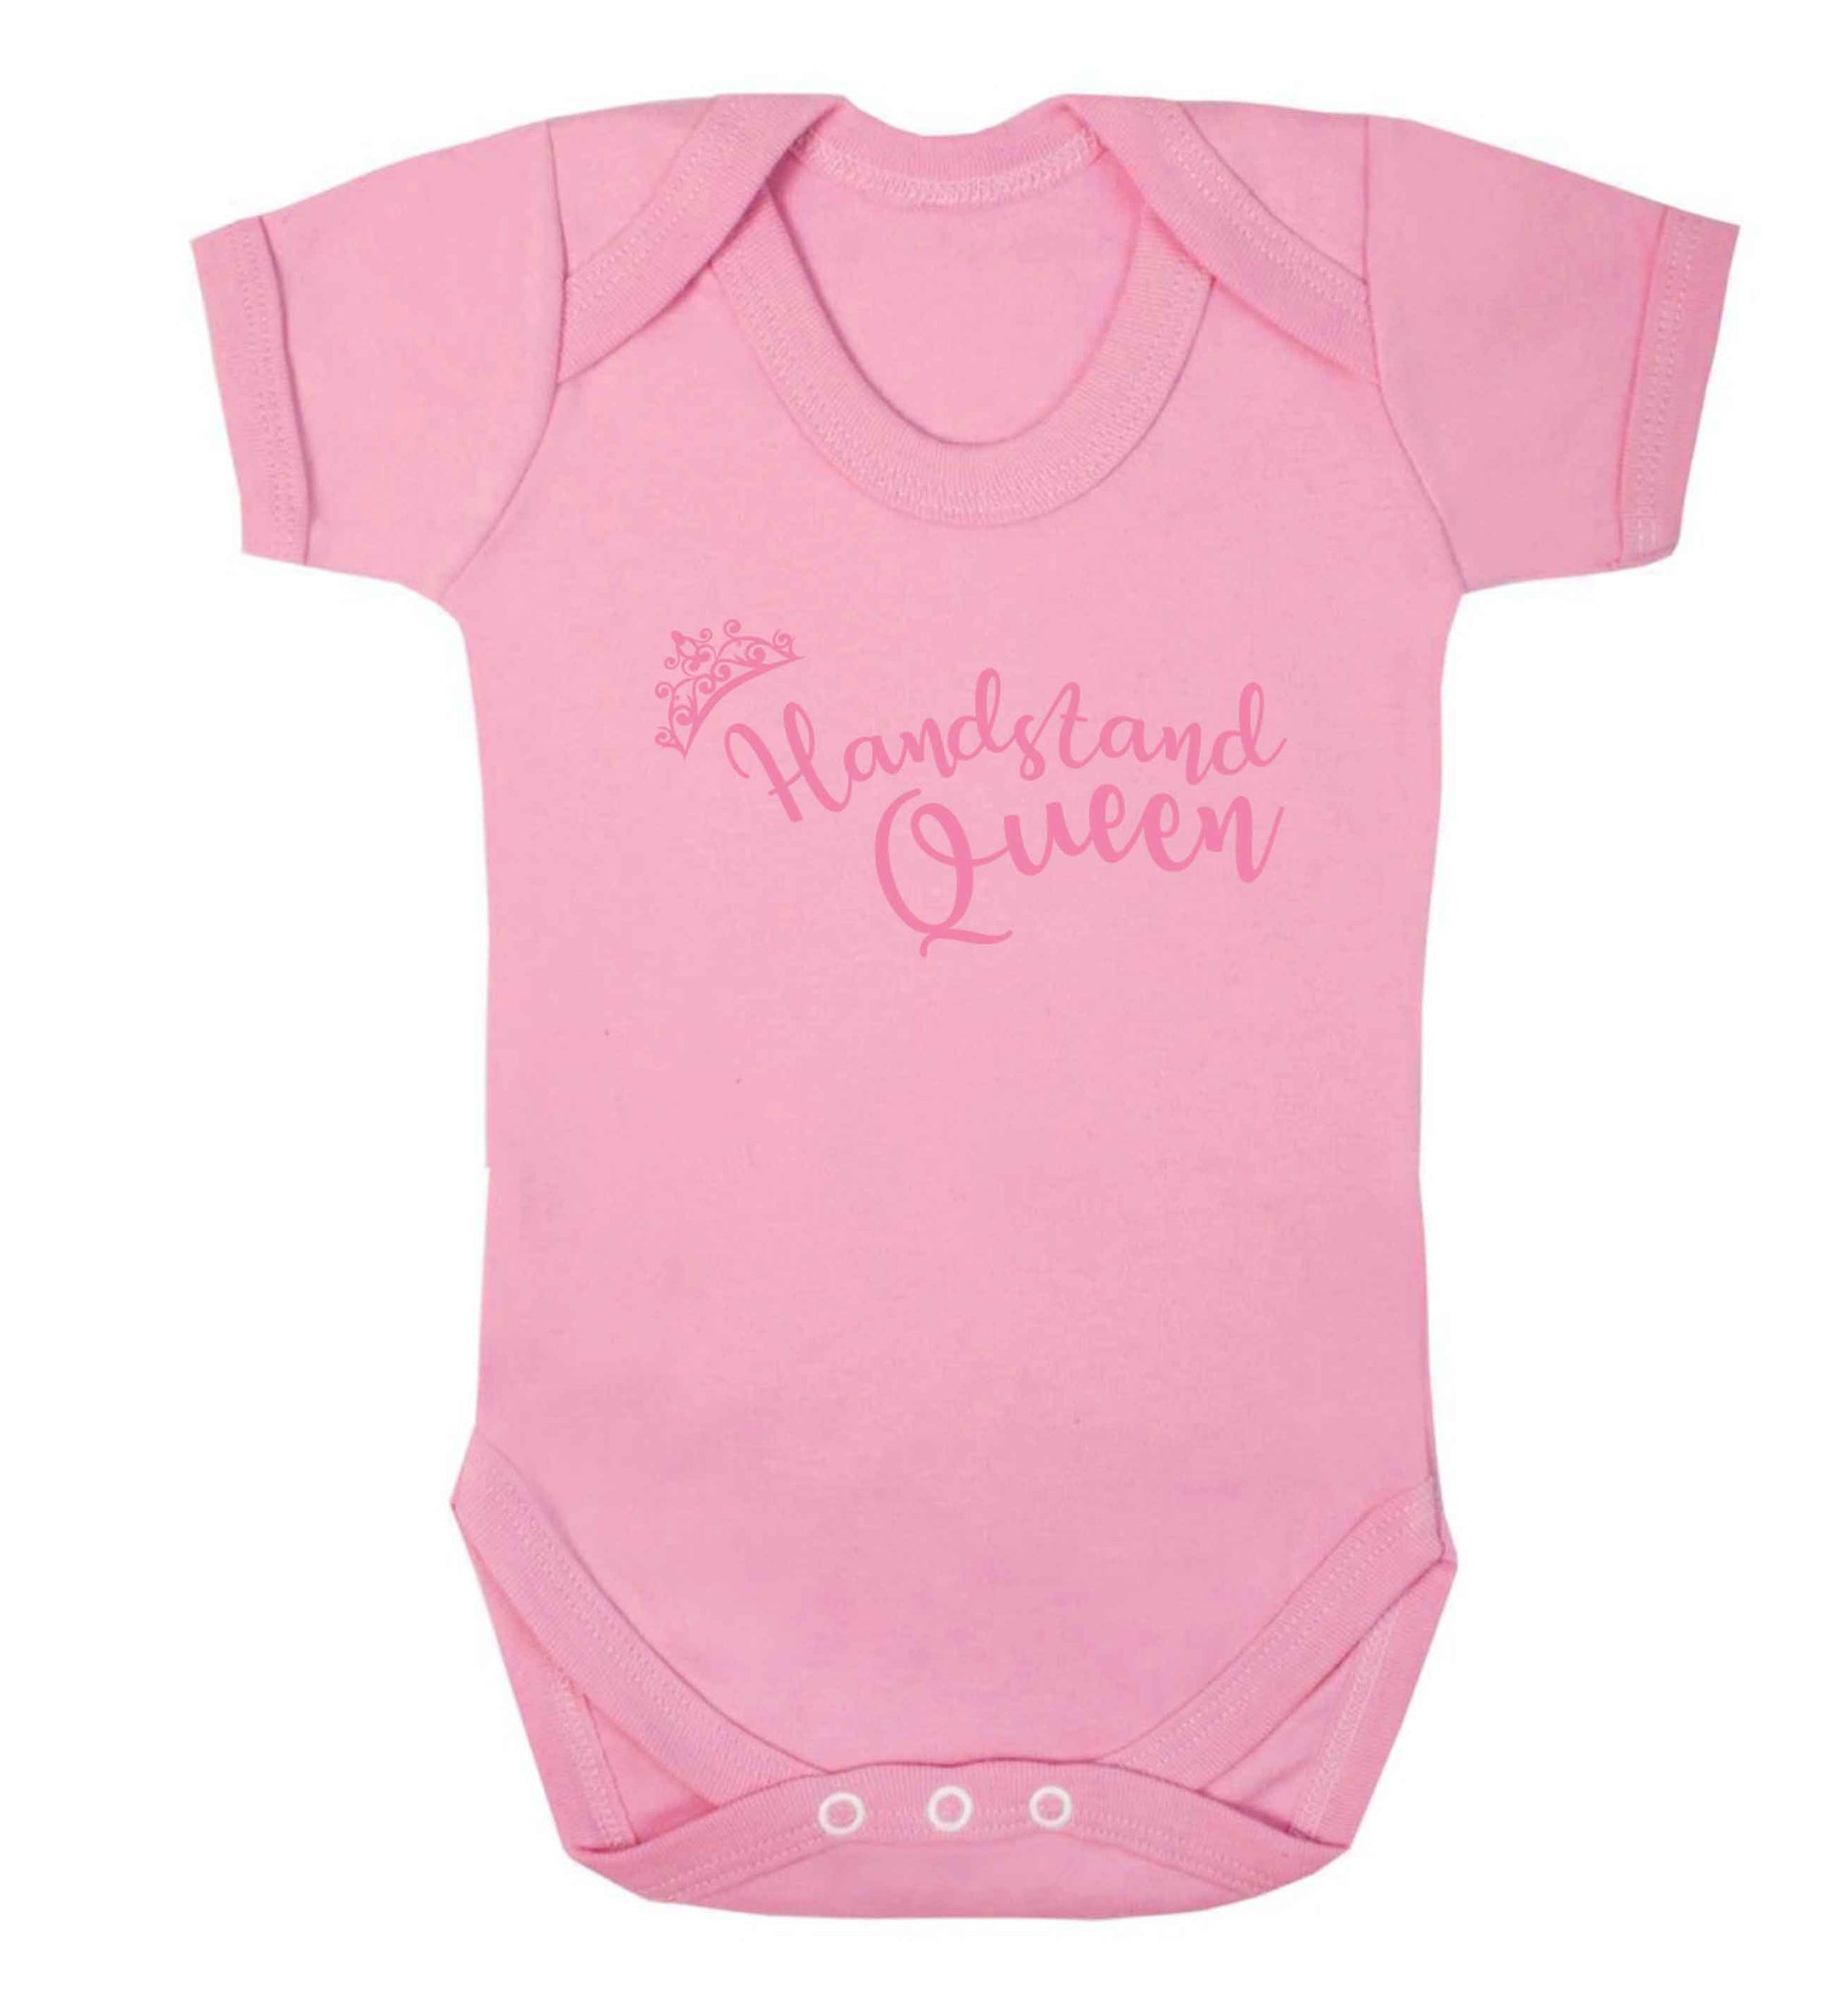 Handstand Queen Baby Vest pale pink 18-24 months